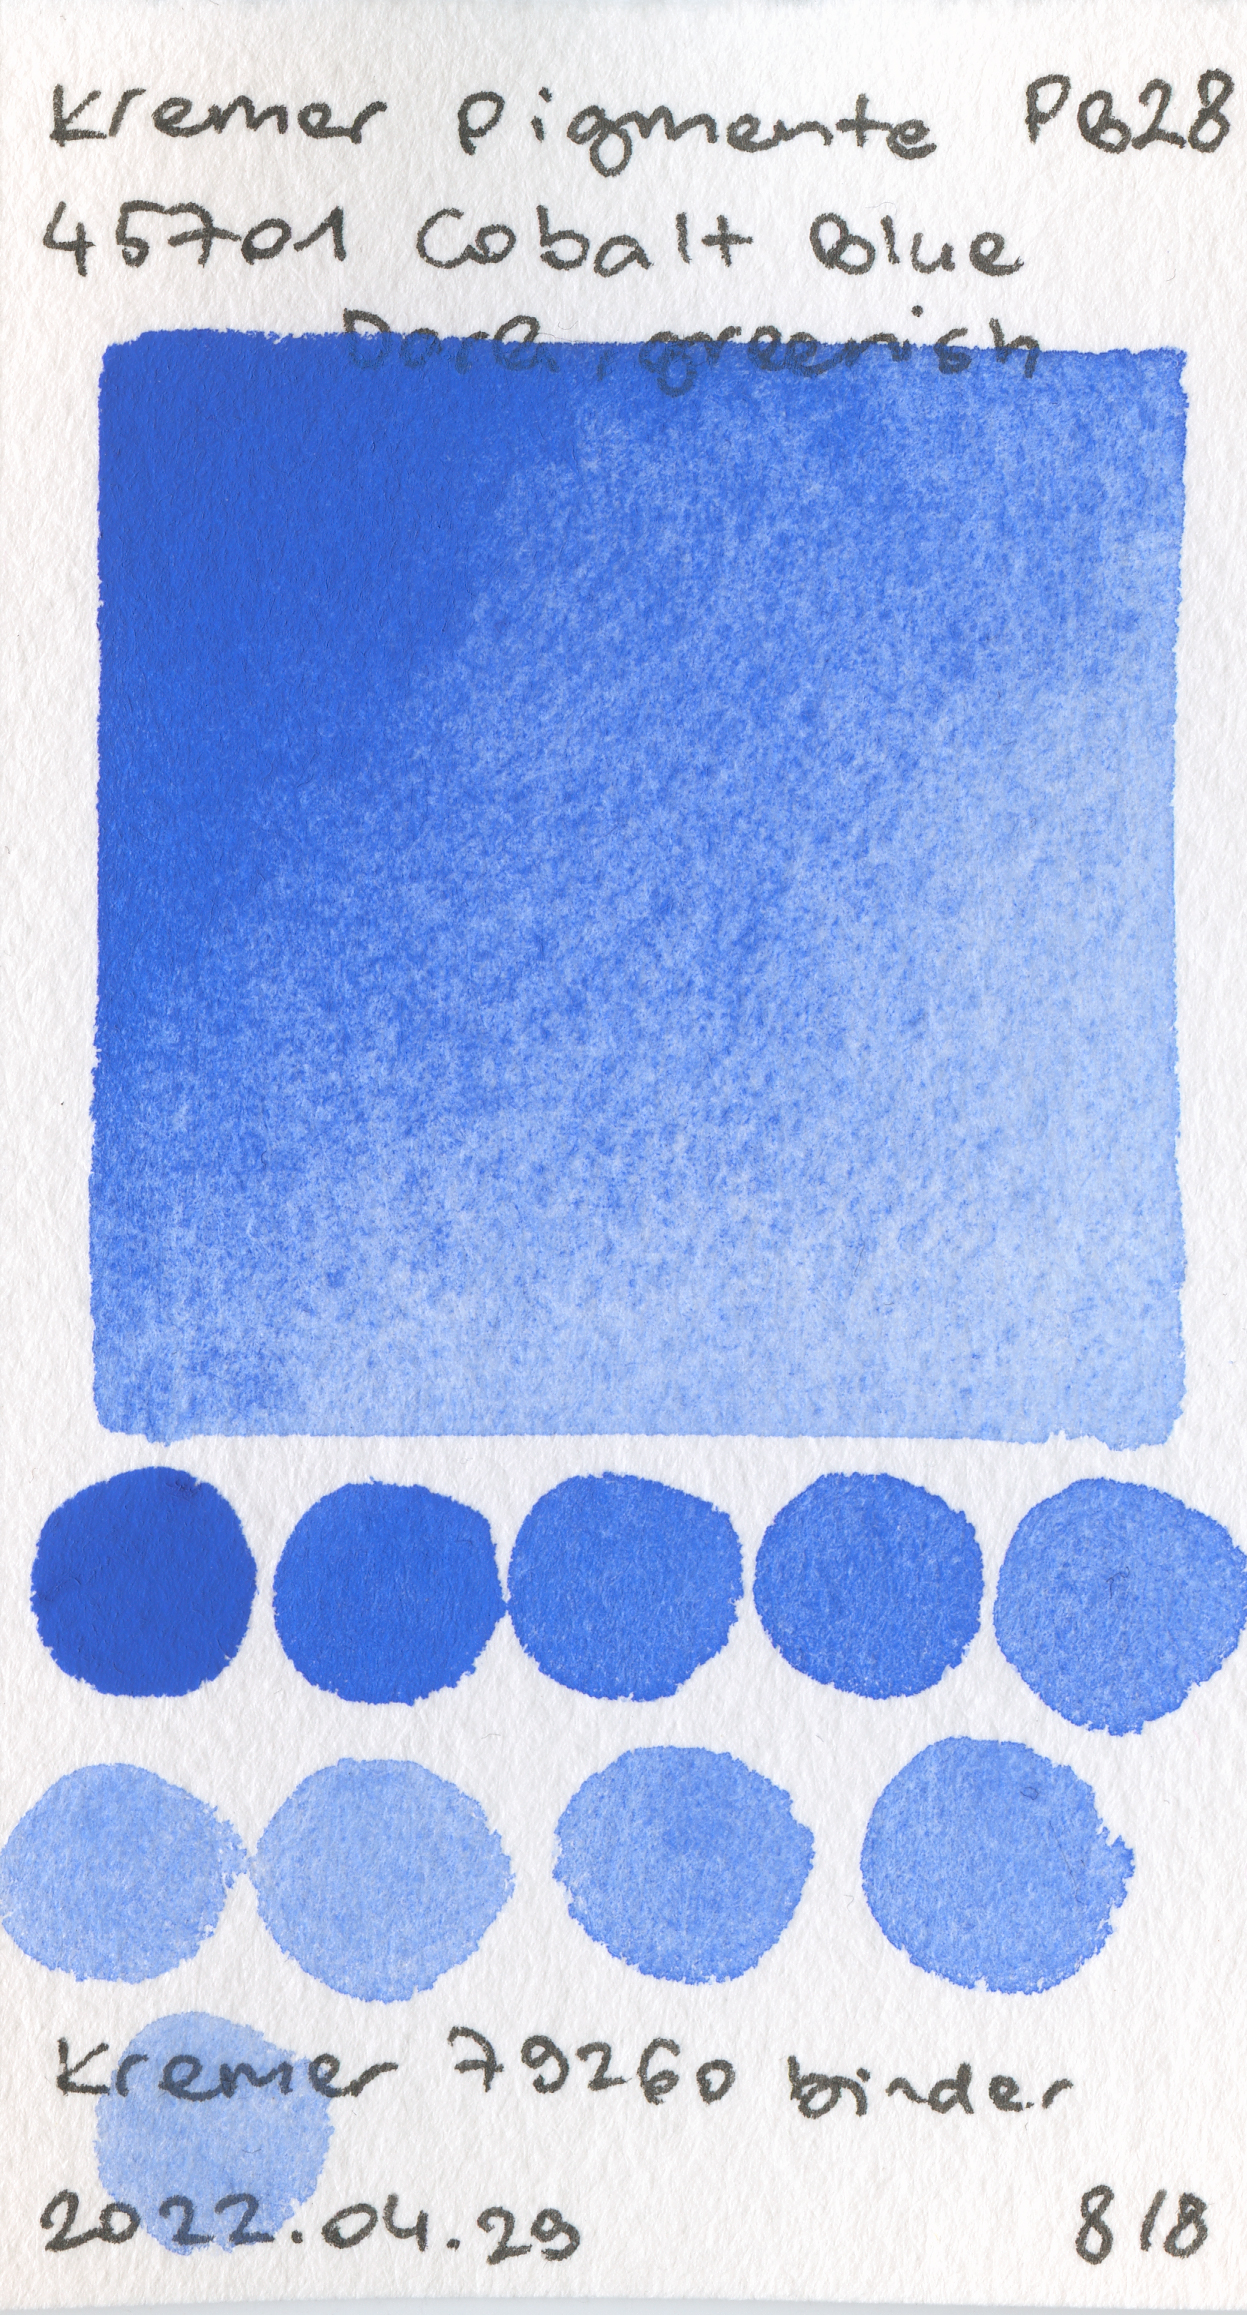 Kremer Pigmente [Dry] Pigments 45701 Cobalt Blue Dark, greenish PB28 watercolor swatch